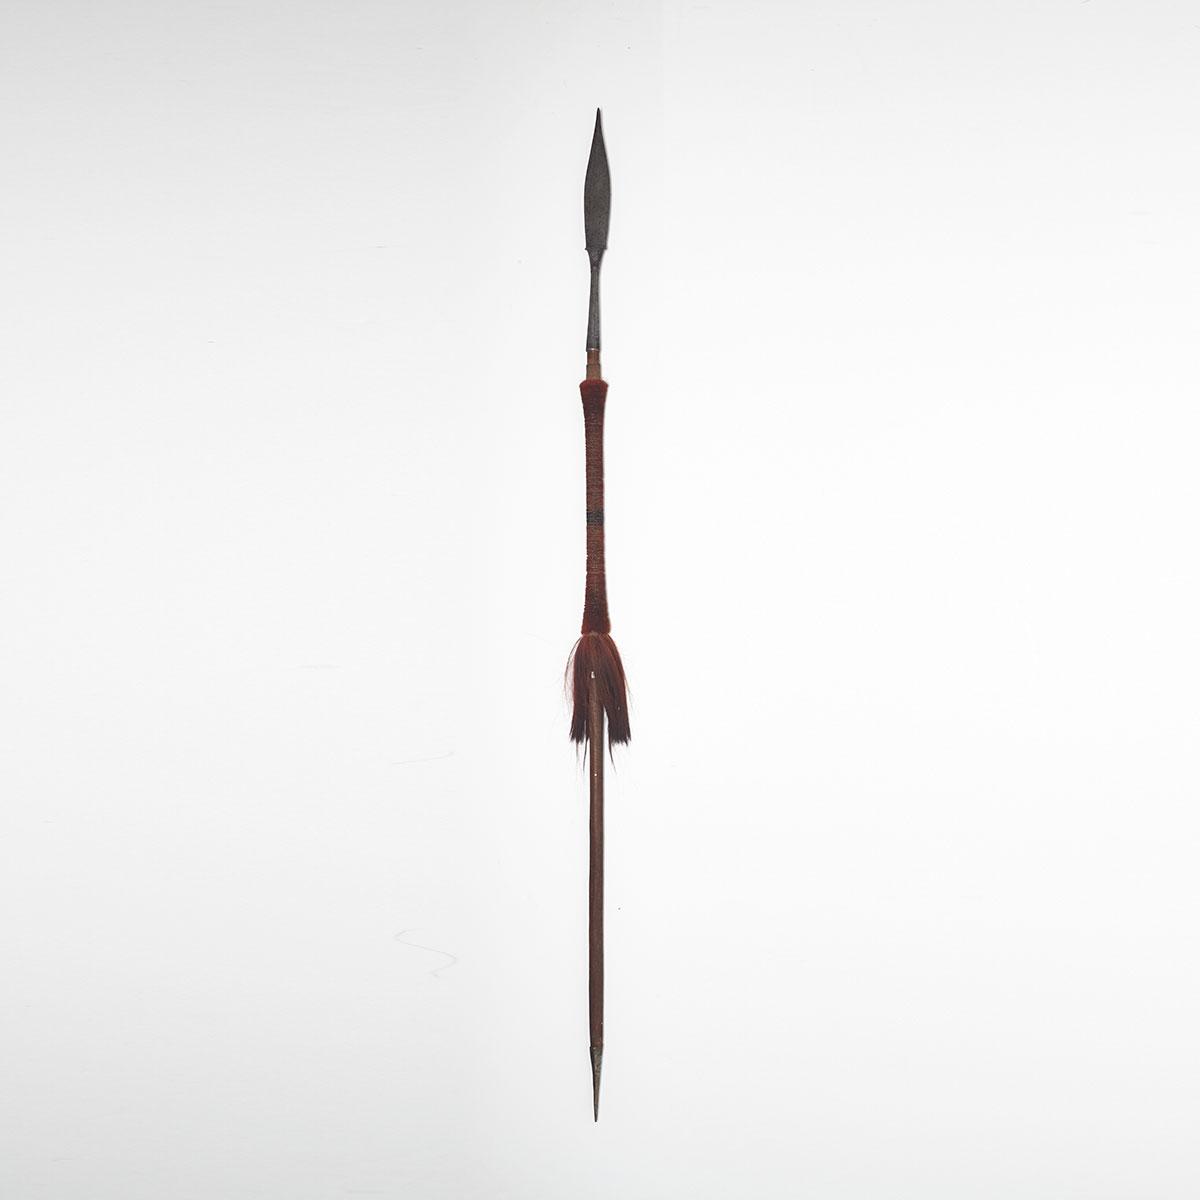 Nagaland Mao or Konyak Spear, 20th century